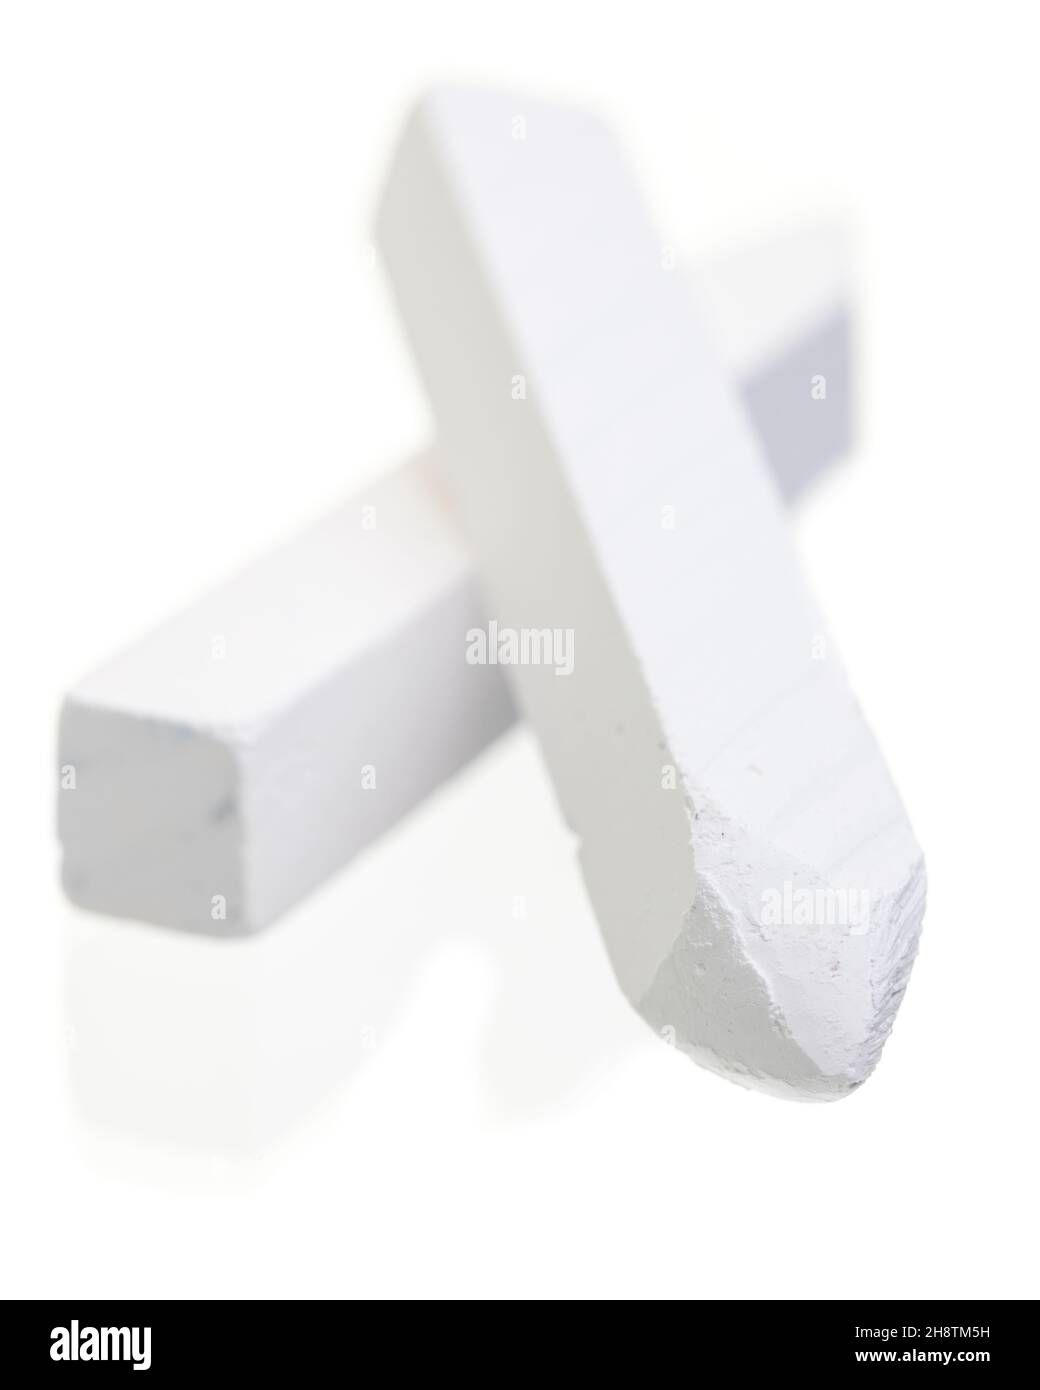 Dos trozos de tiza blanca aislados sobre fondo blanco Foto de stock